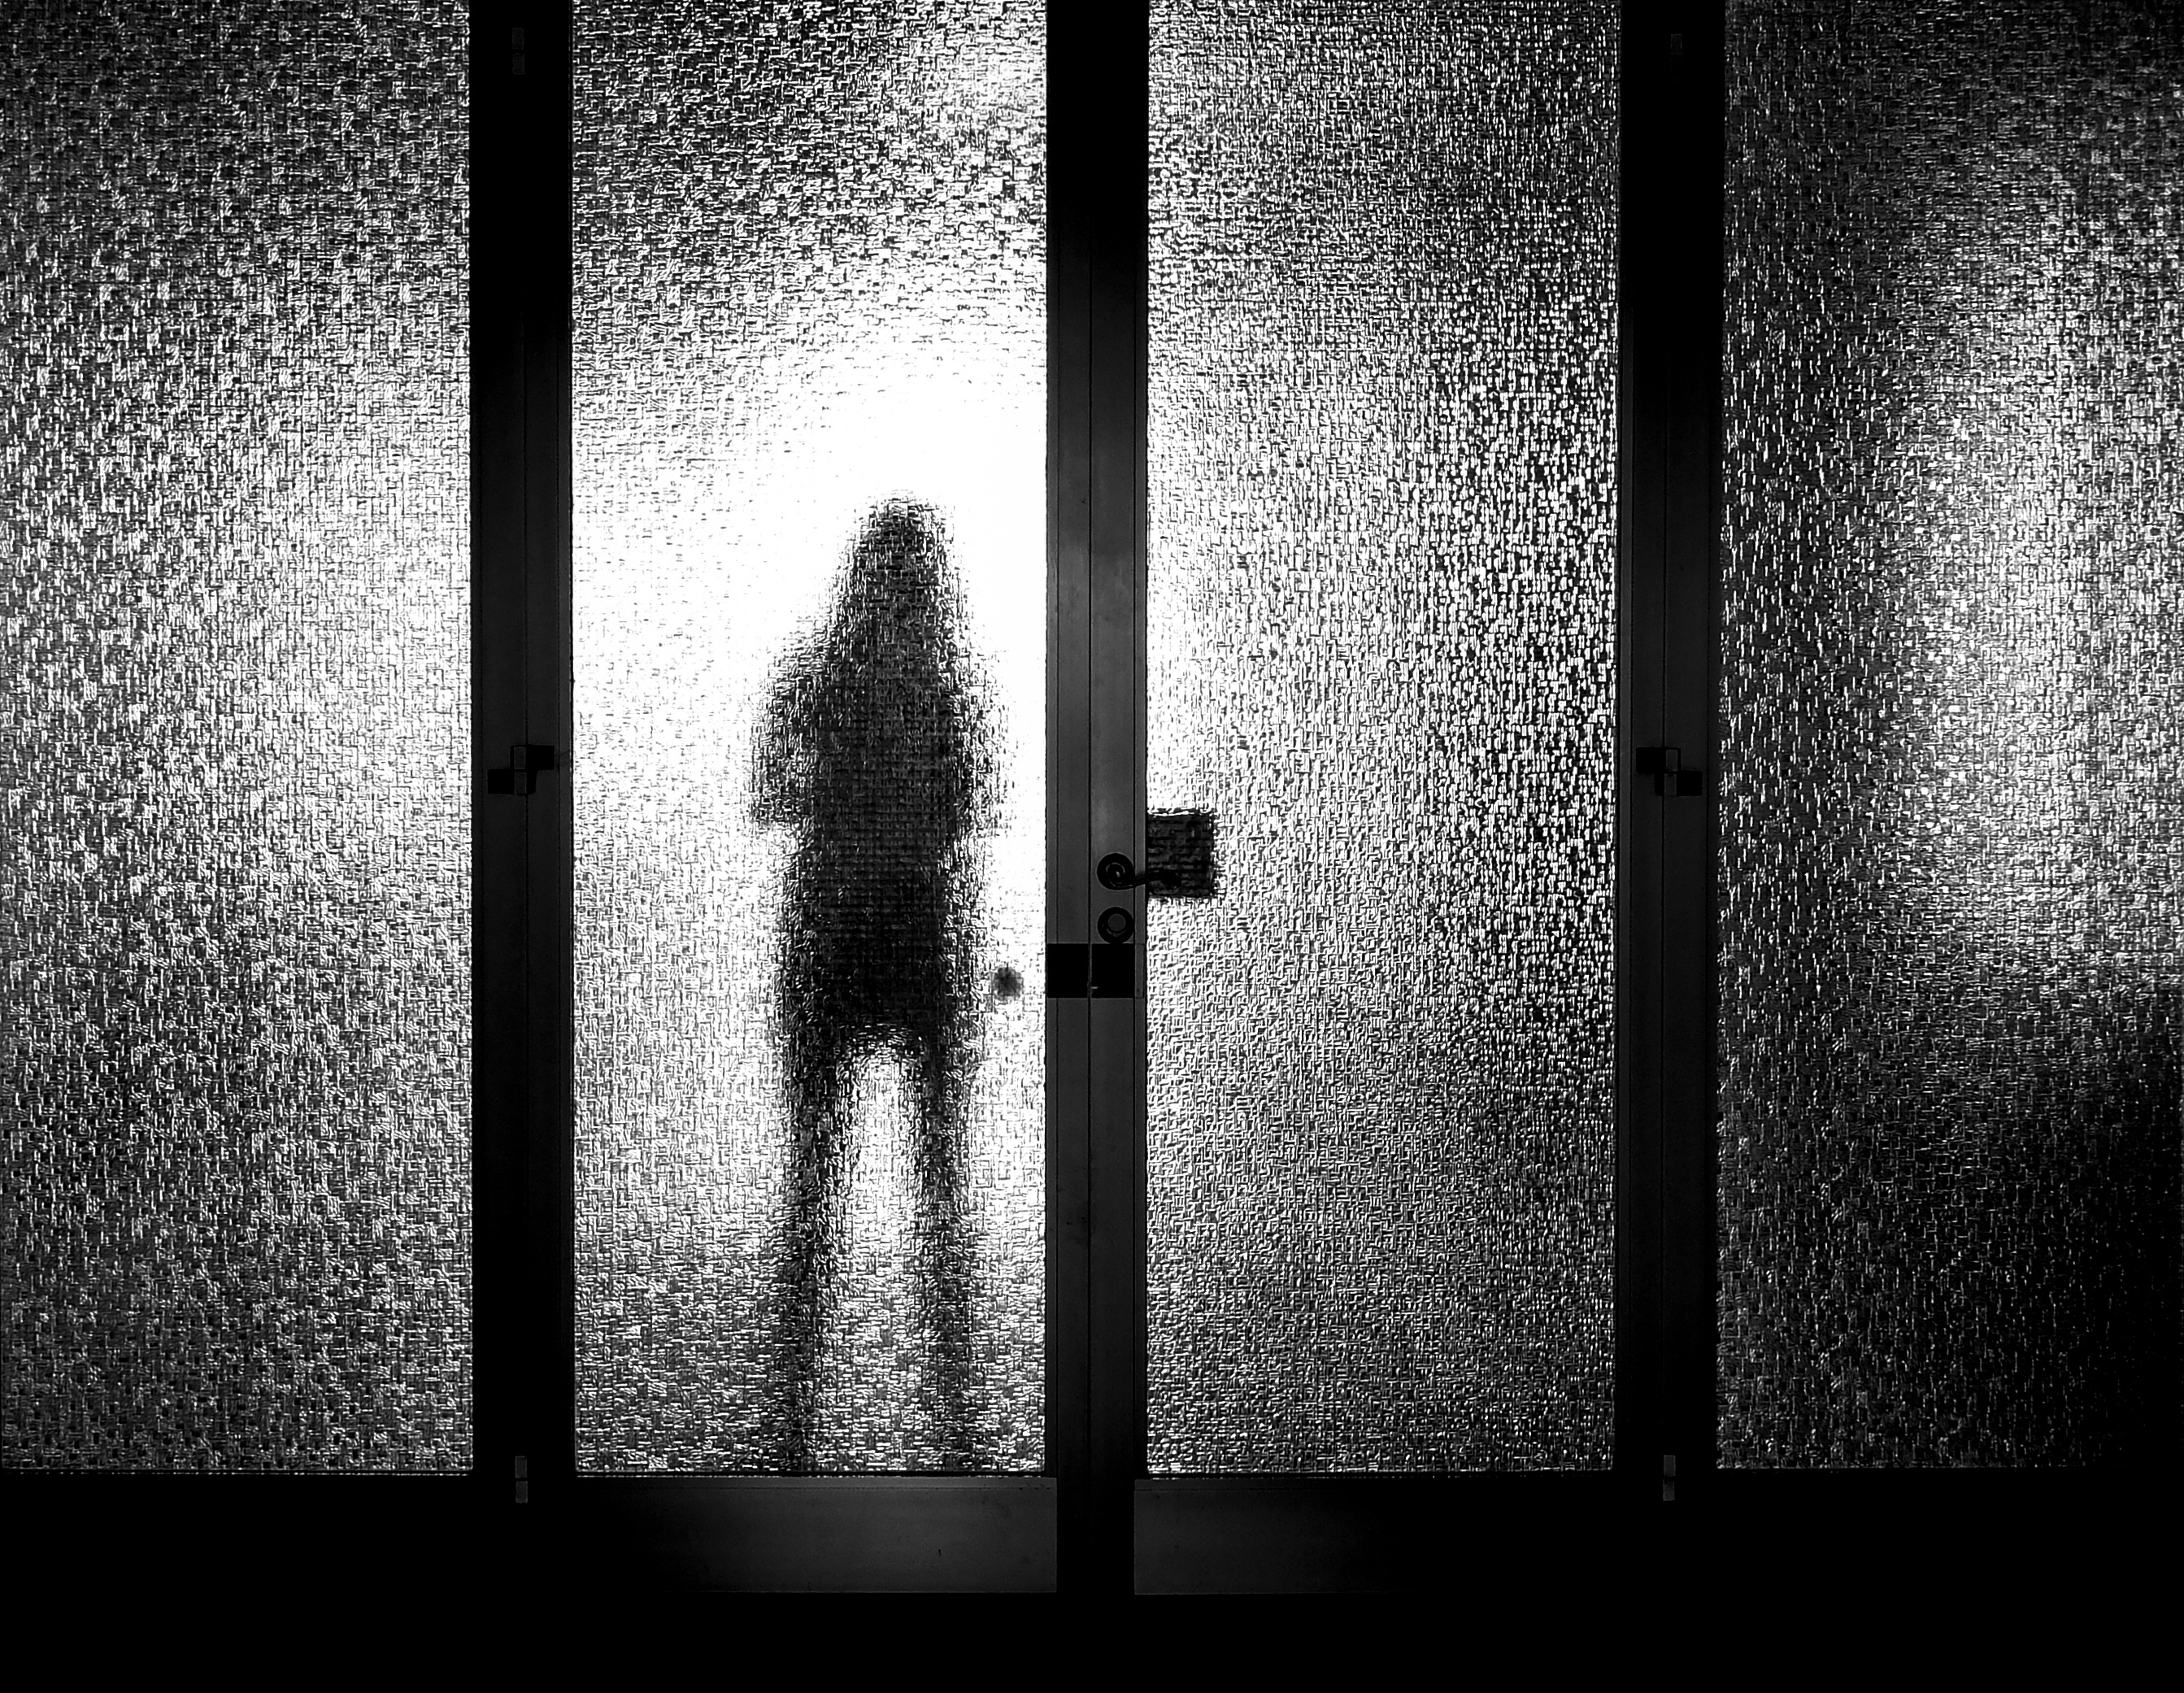 A person&#x27;s silhouette through a glass door